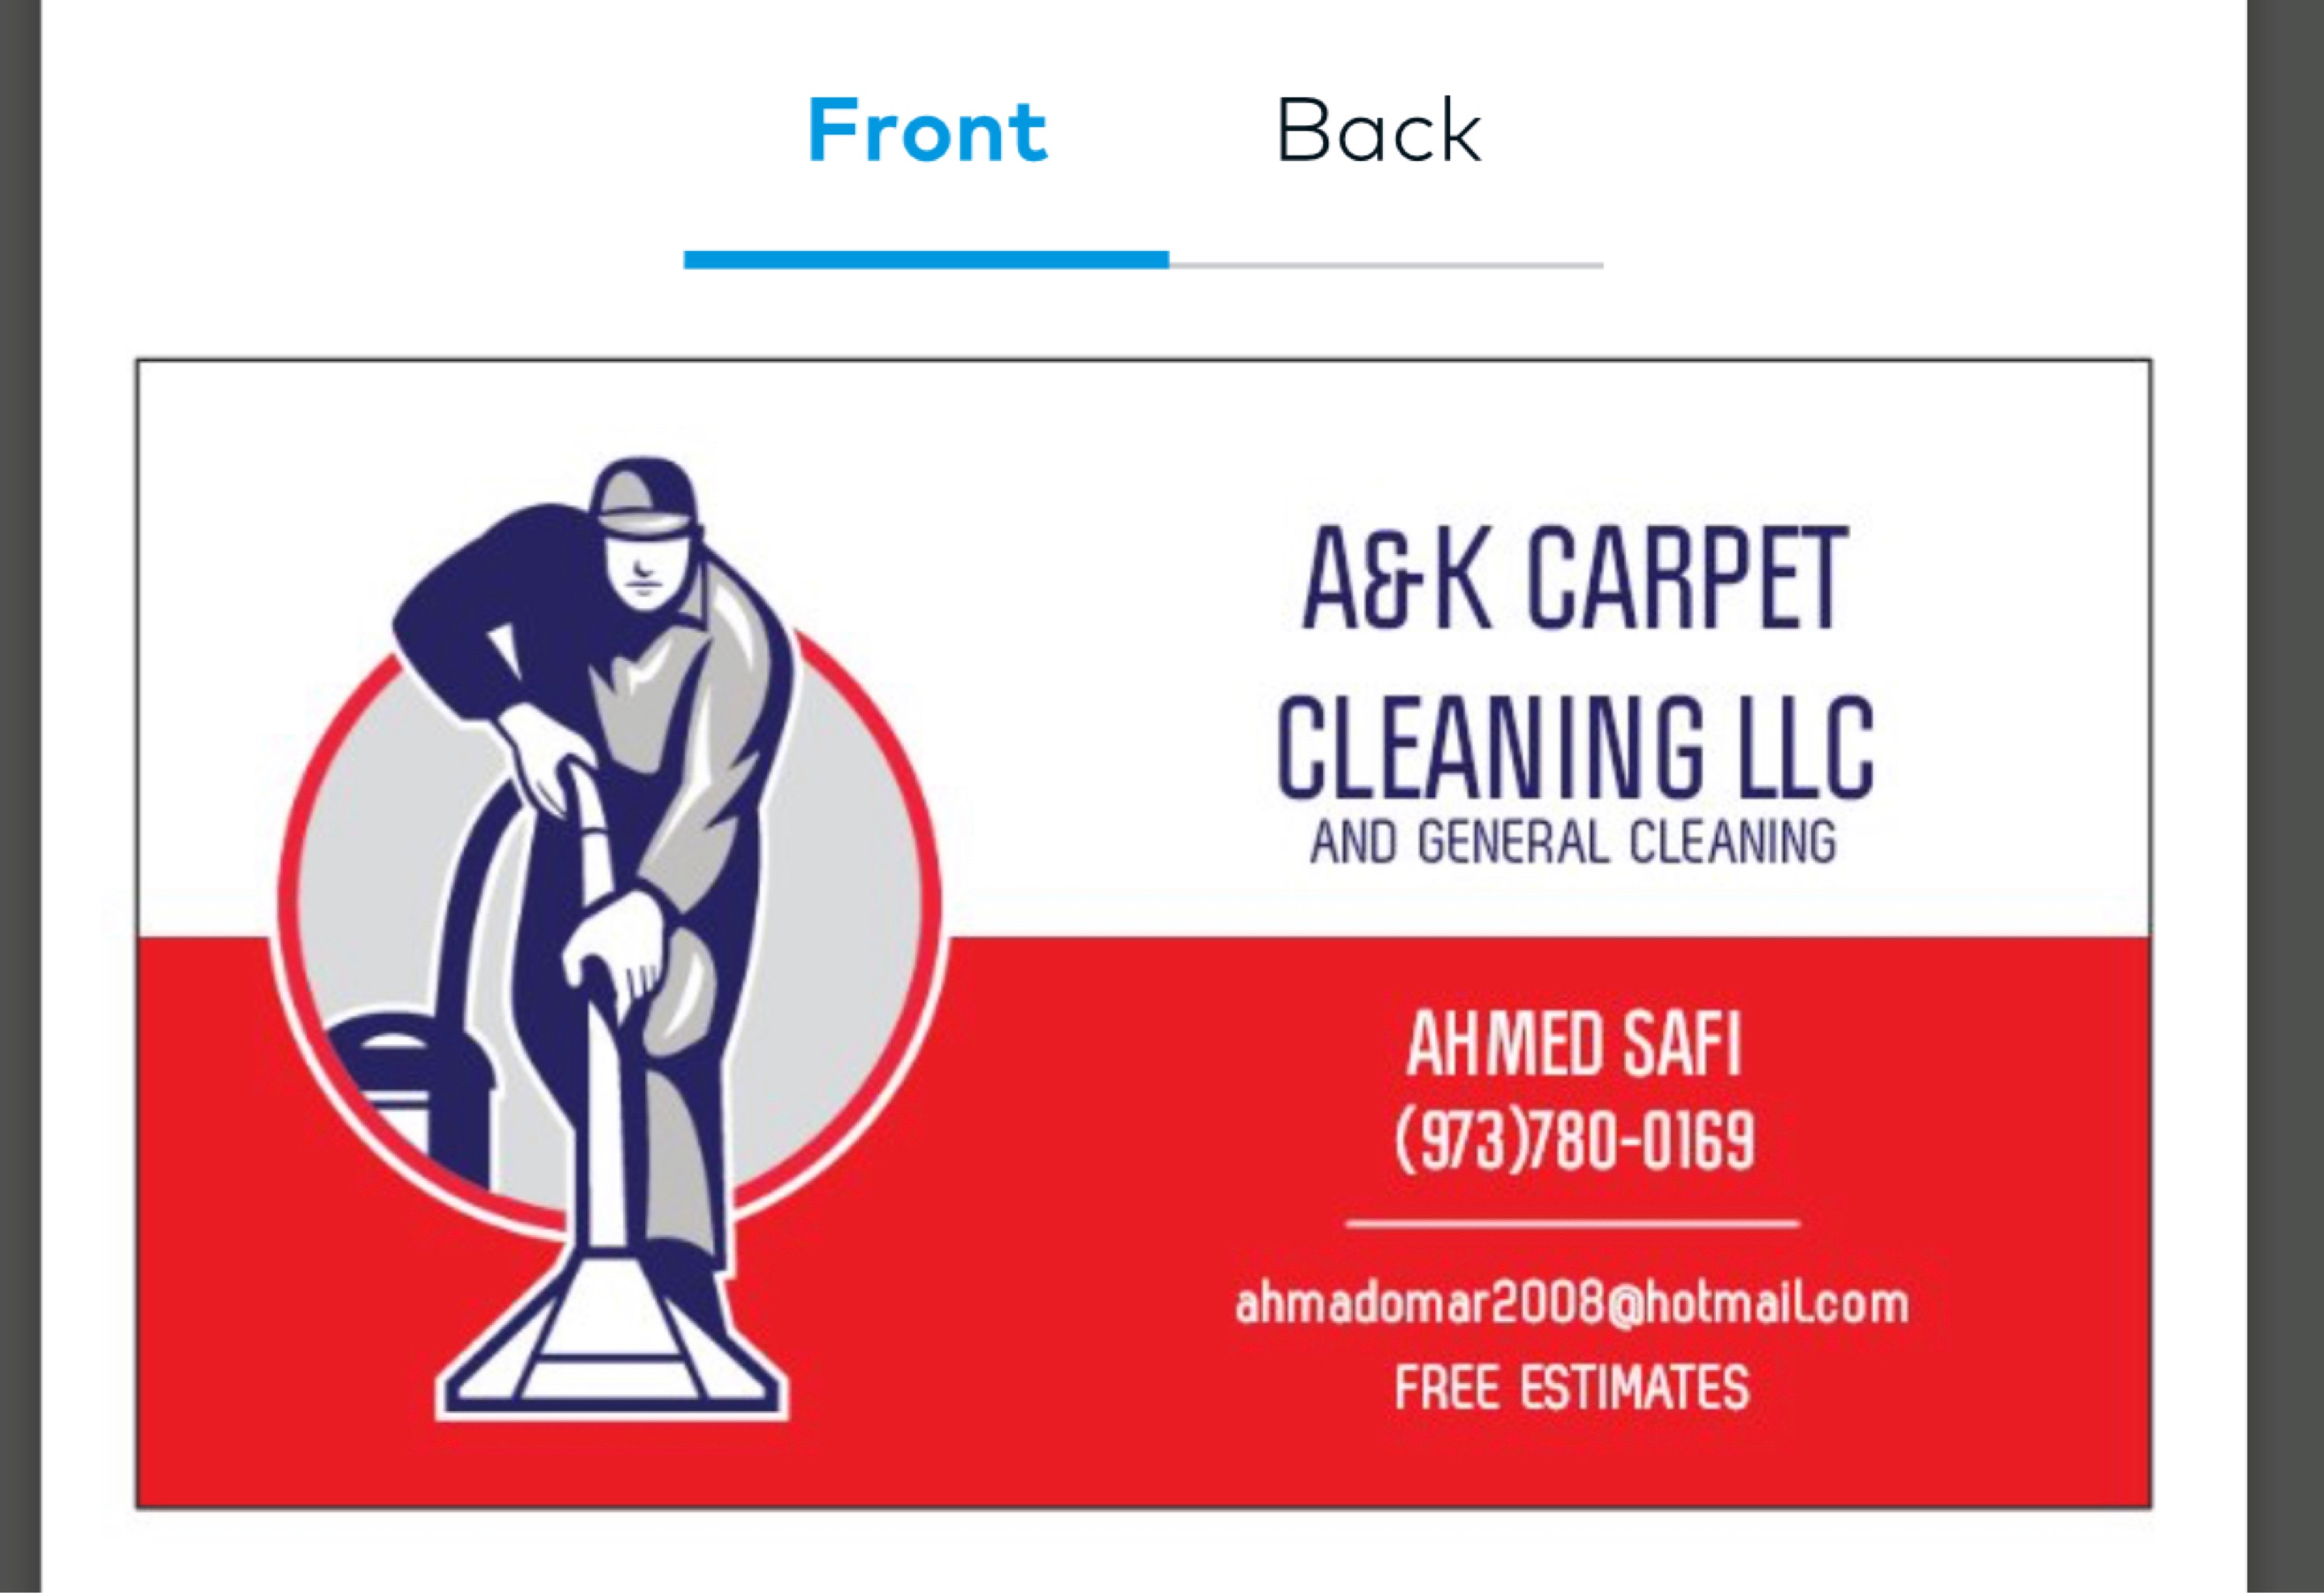 ANK Carpet Cleaning Logo